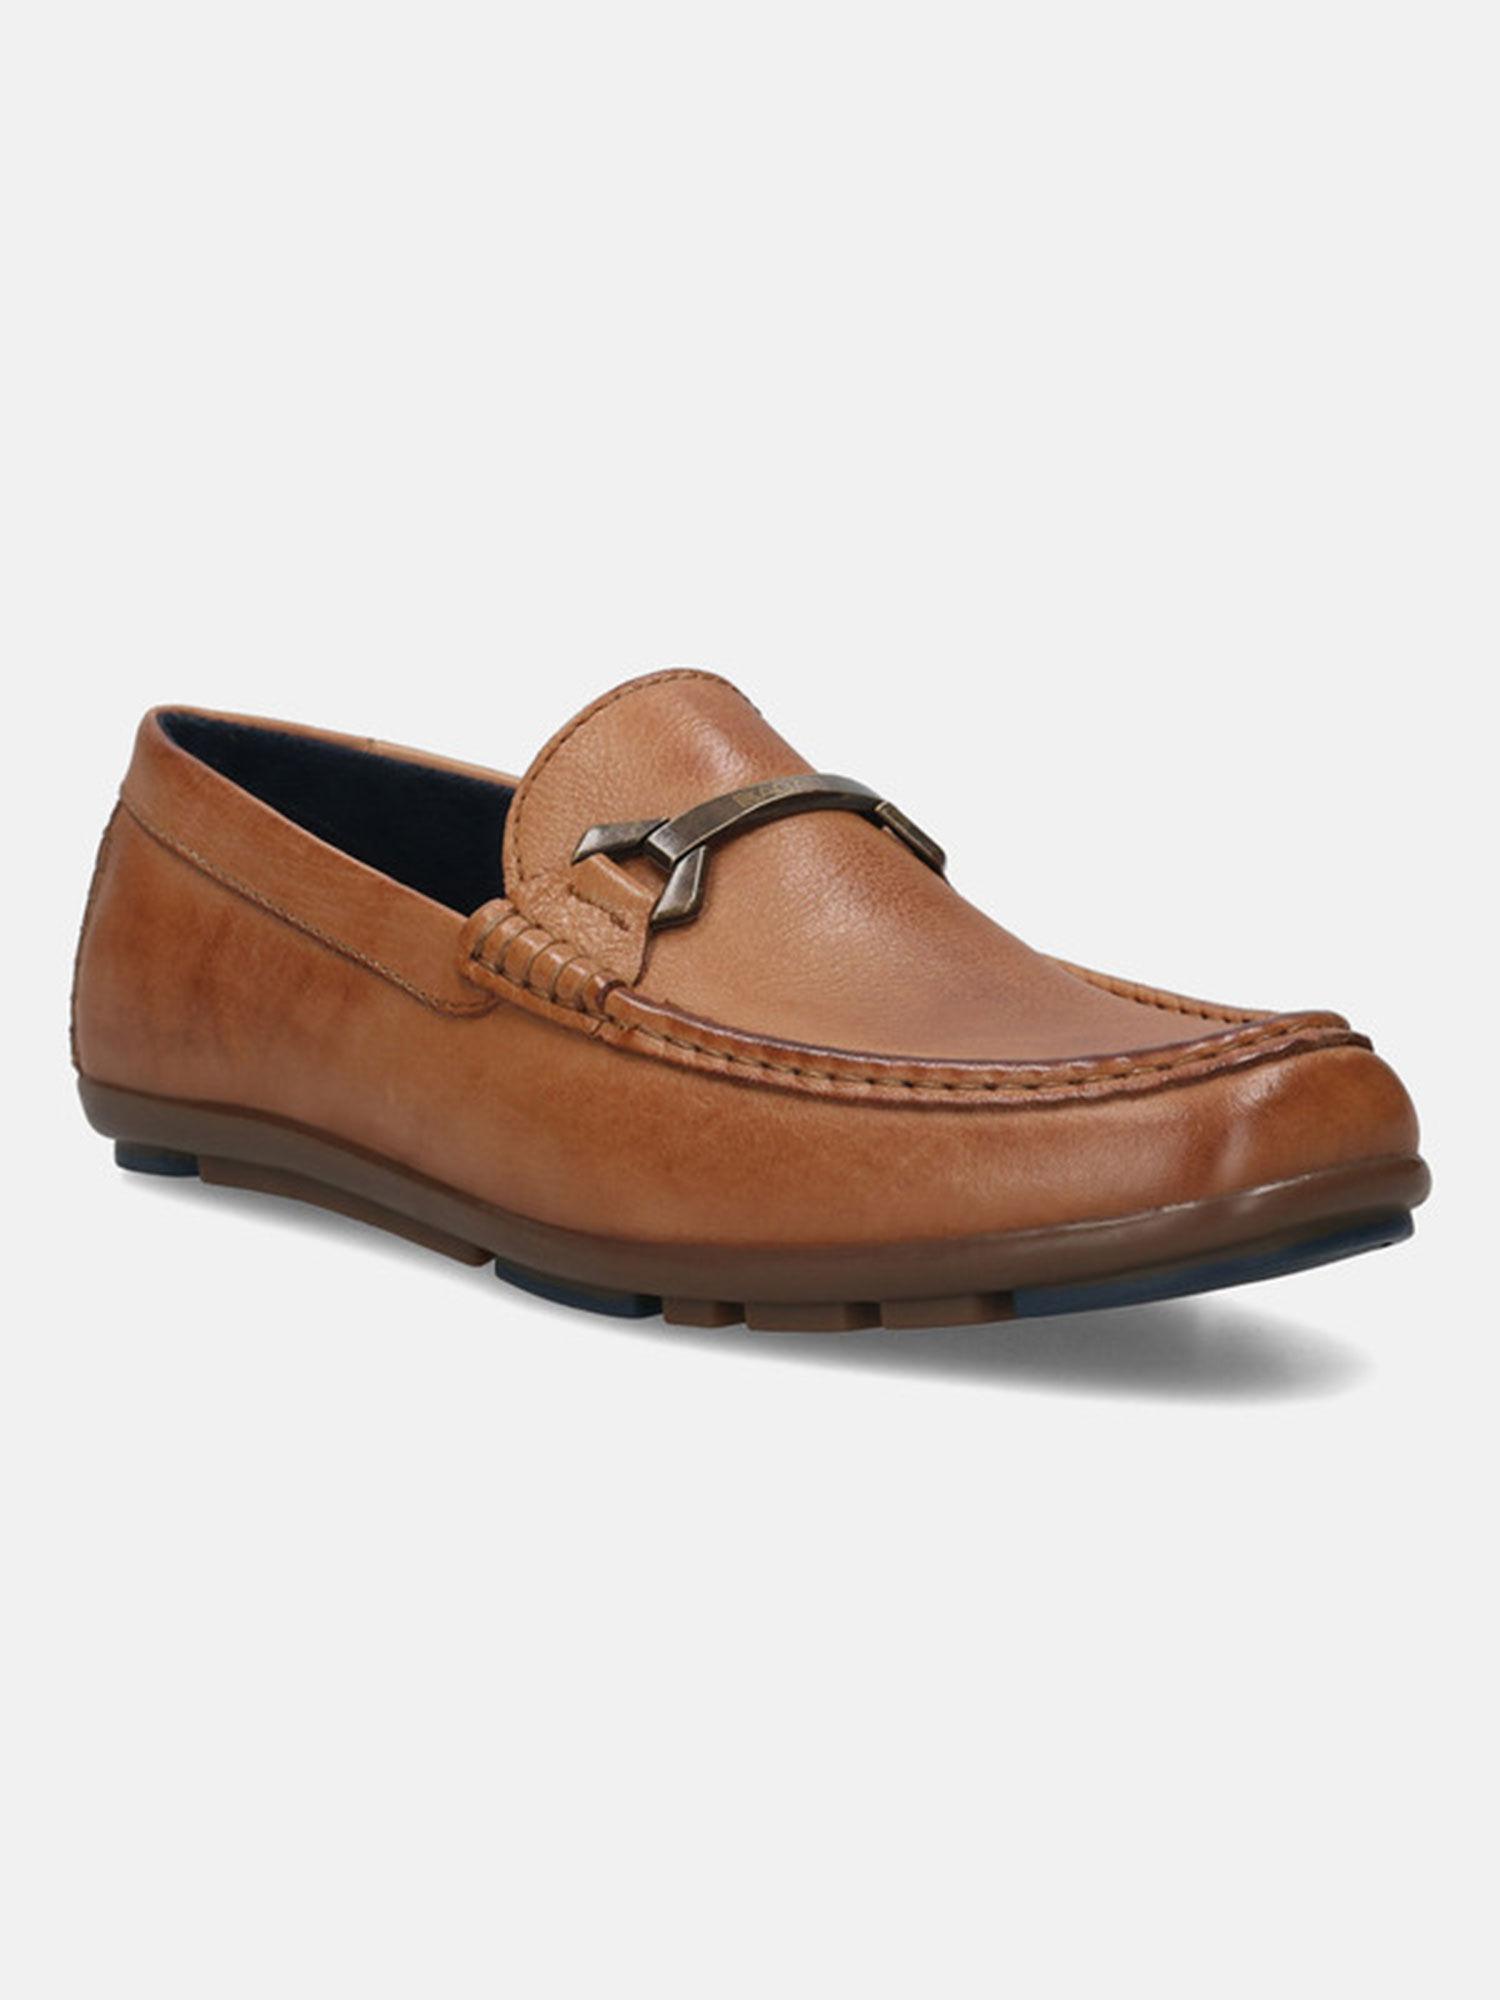 corrado brown leather mens formal shoes